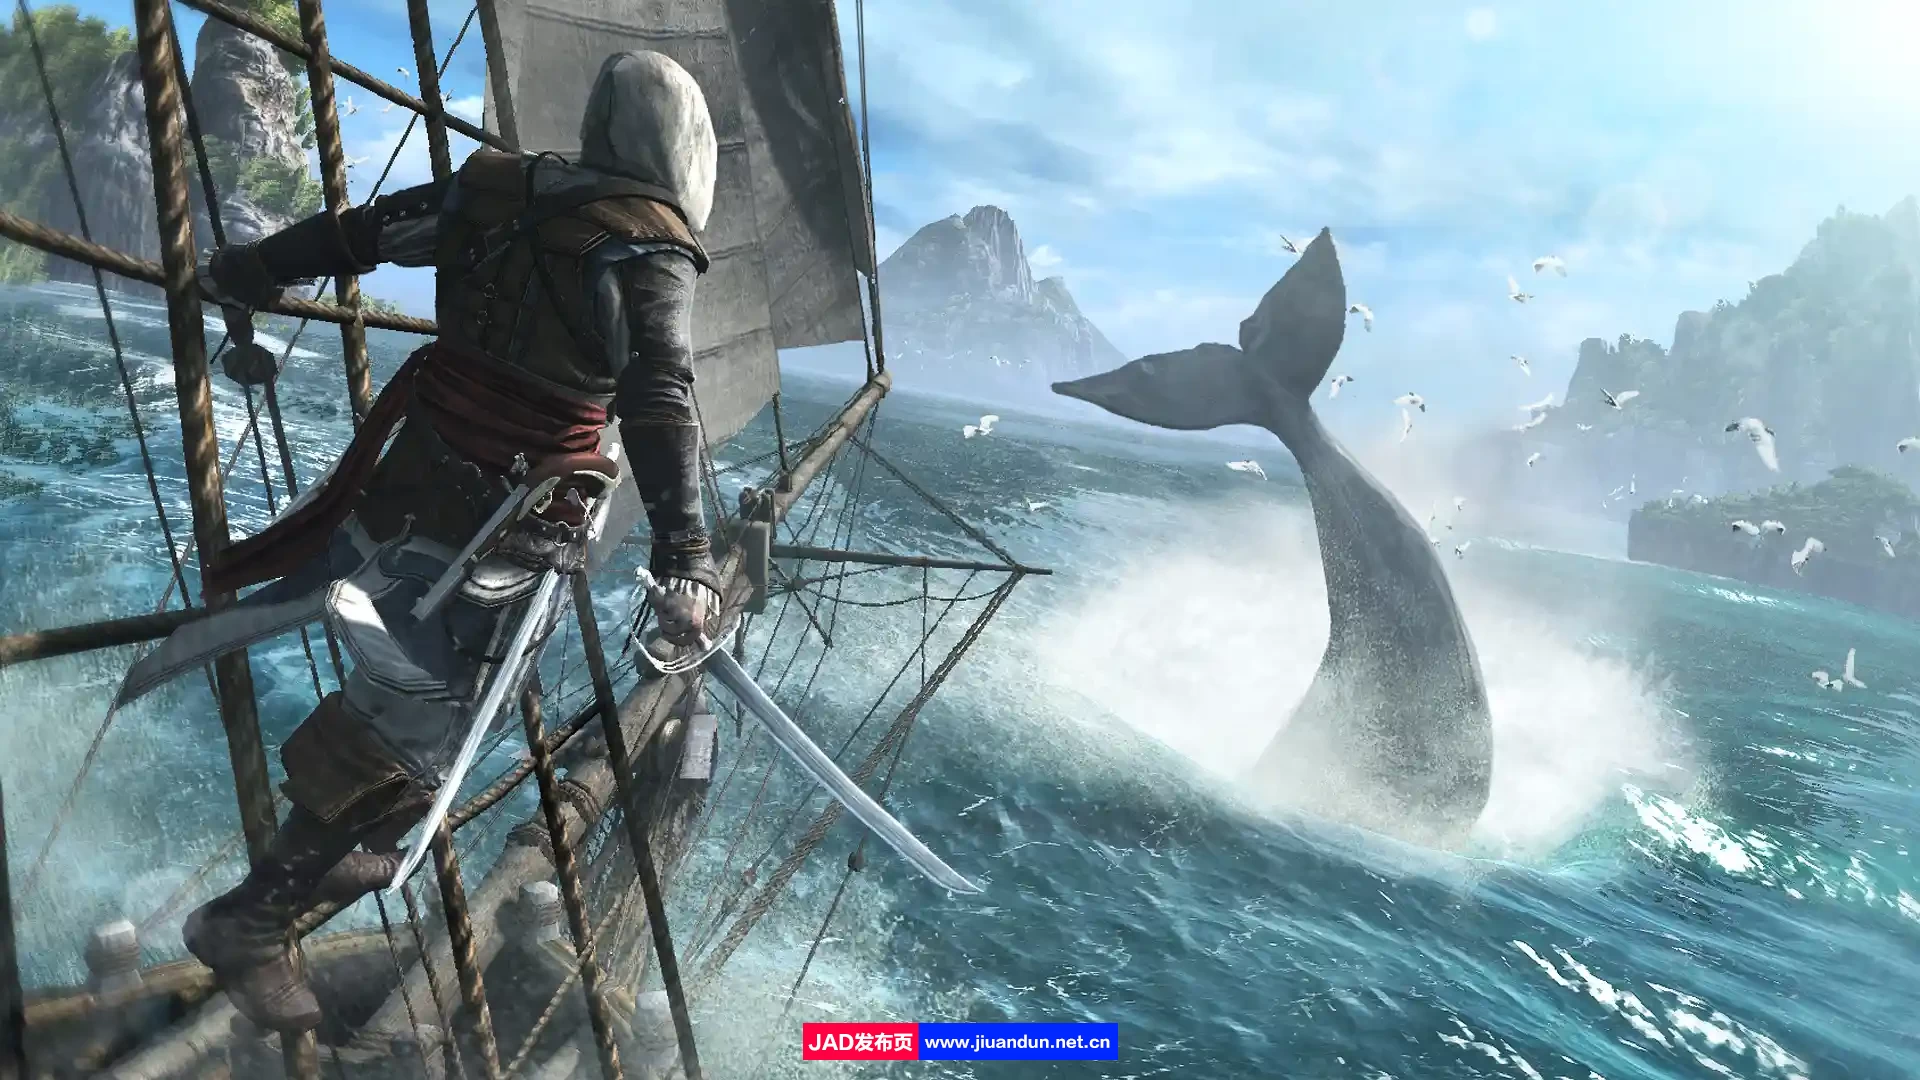 刺客信条IV:黑旗Assassin's Creed IV: Black Flag[v 1.08+DLC]免安装简体中文版7月26日更新17.4GB 单机游戏 第7张